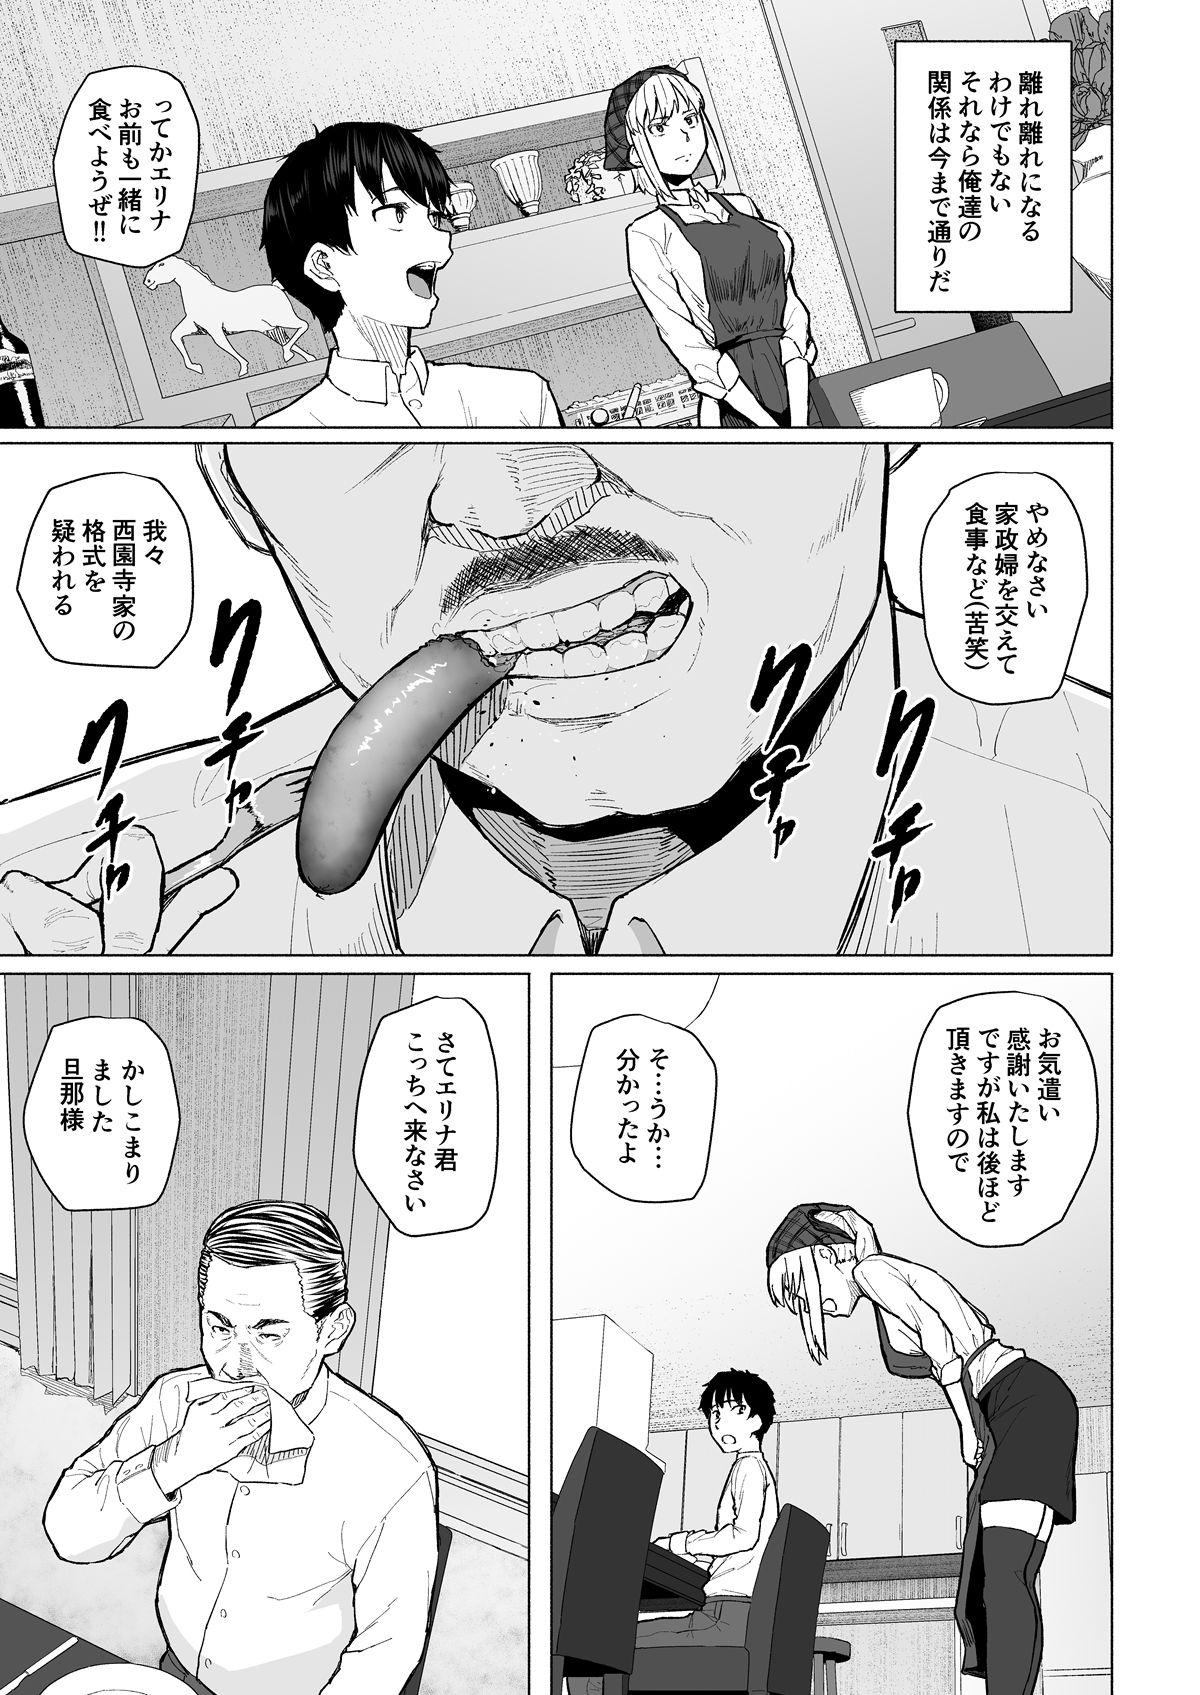 Anus Botsu ni Shita Ero Manga 2 Project aborted Furry - Page 4